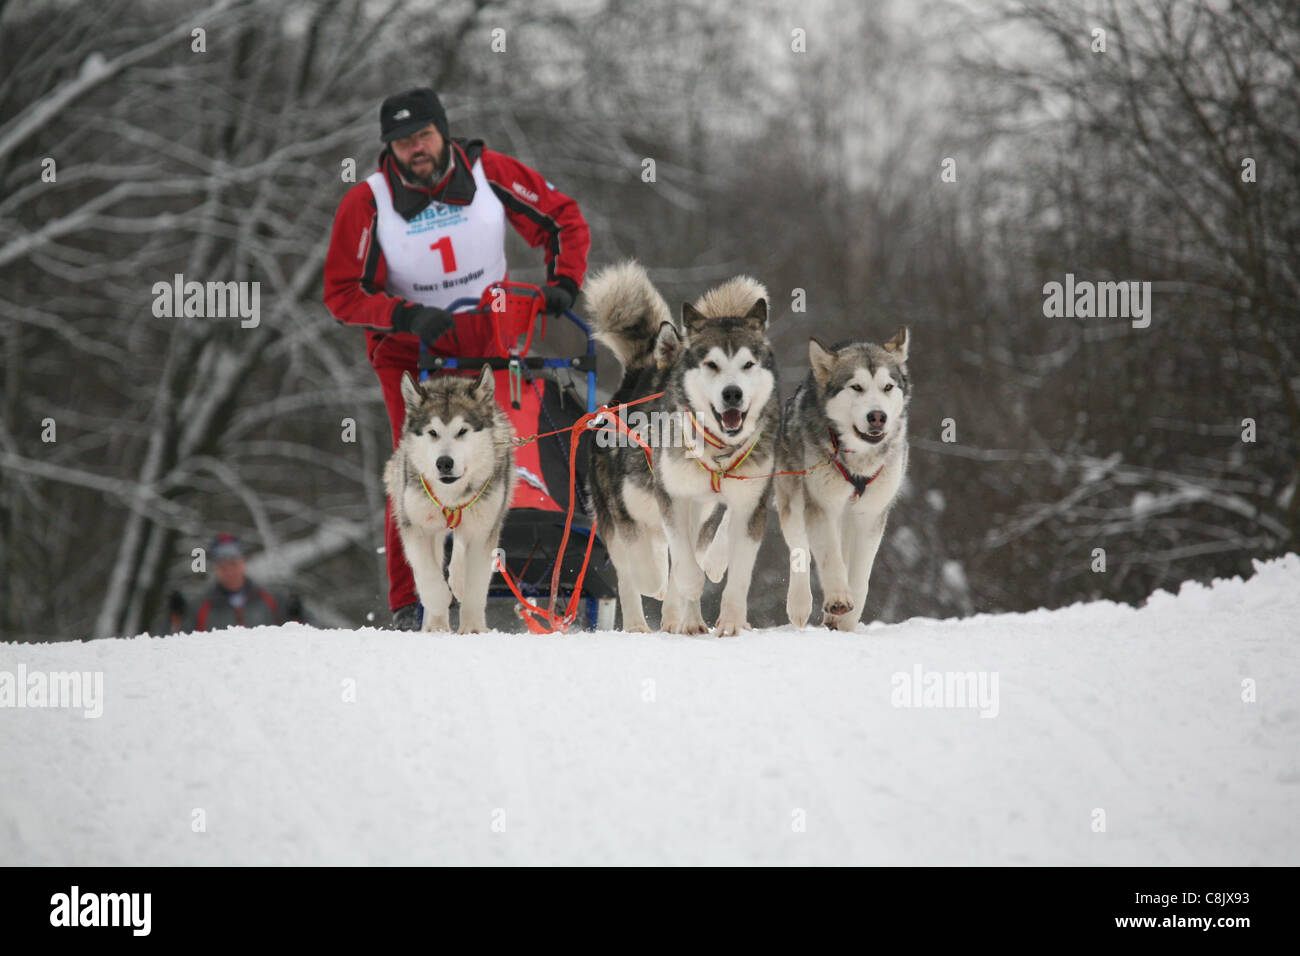 racing dogs husky Stock Photo